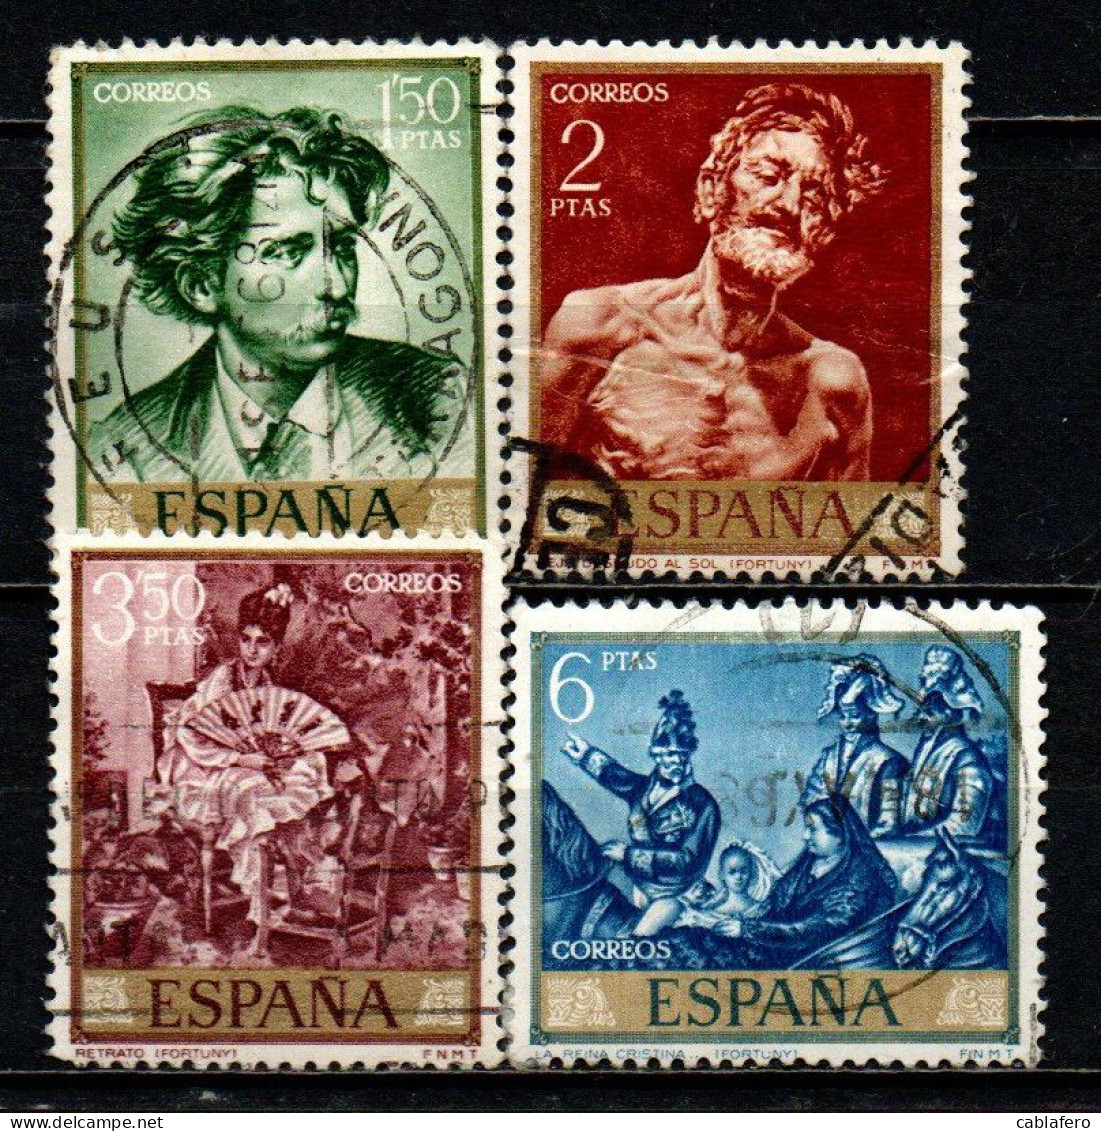 SPAGNA - 1968 - DIPINTI DI MARIANO FORTUNY MARSAL - USATI - Used Stamps